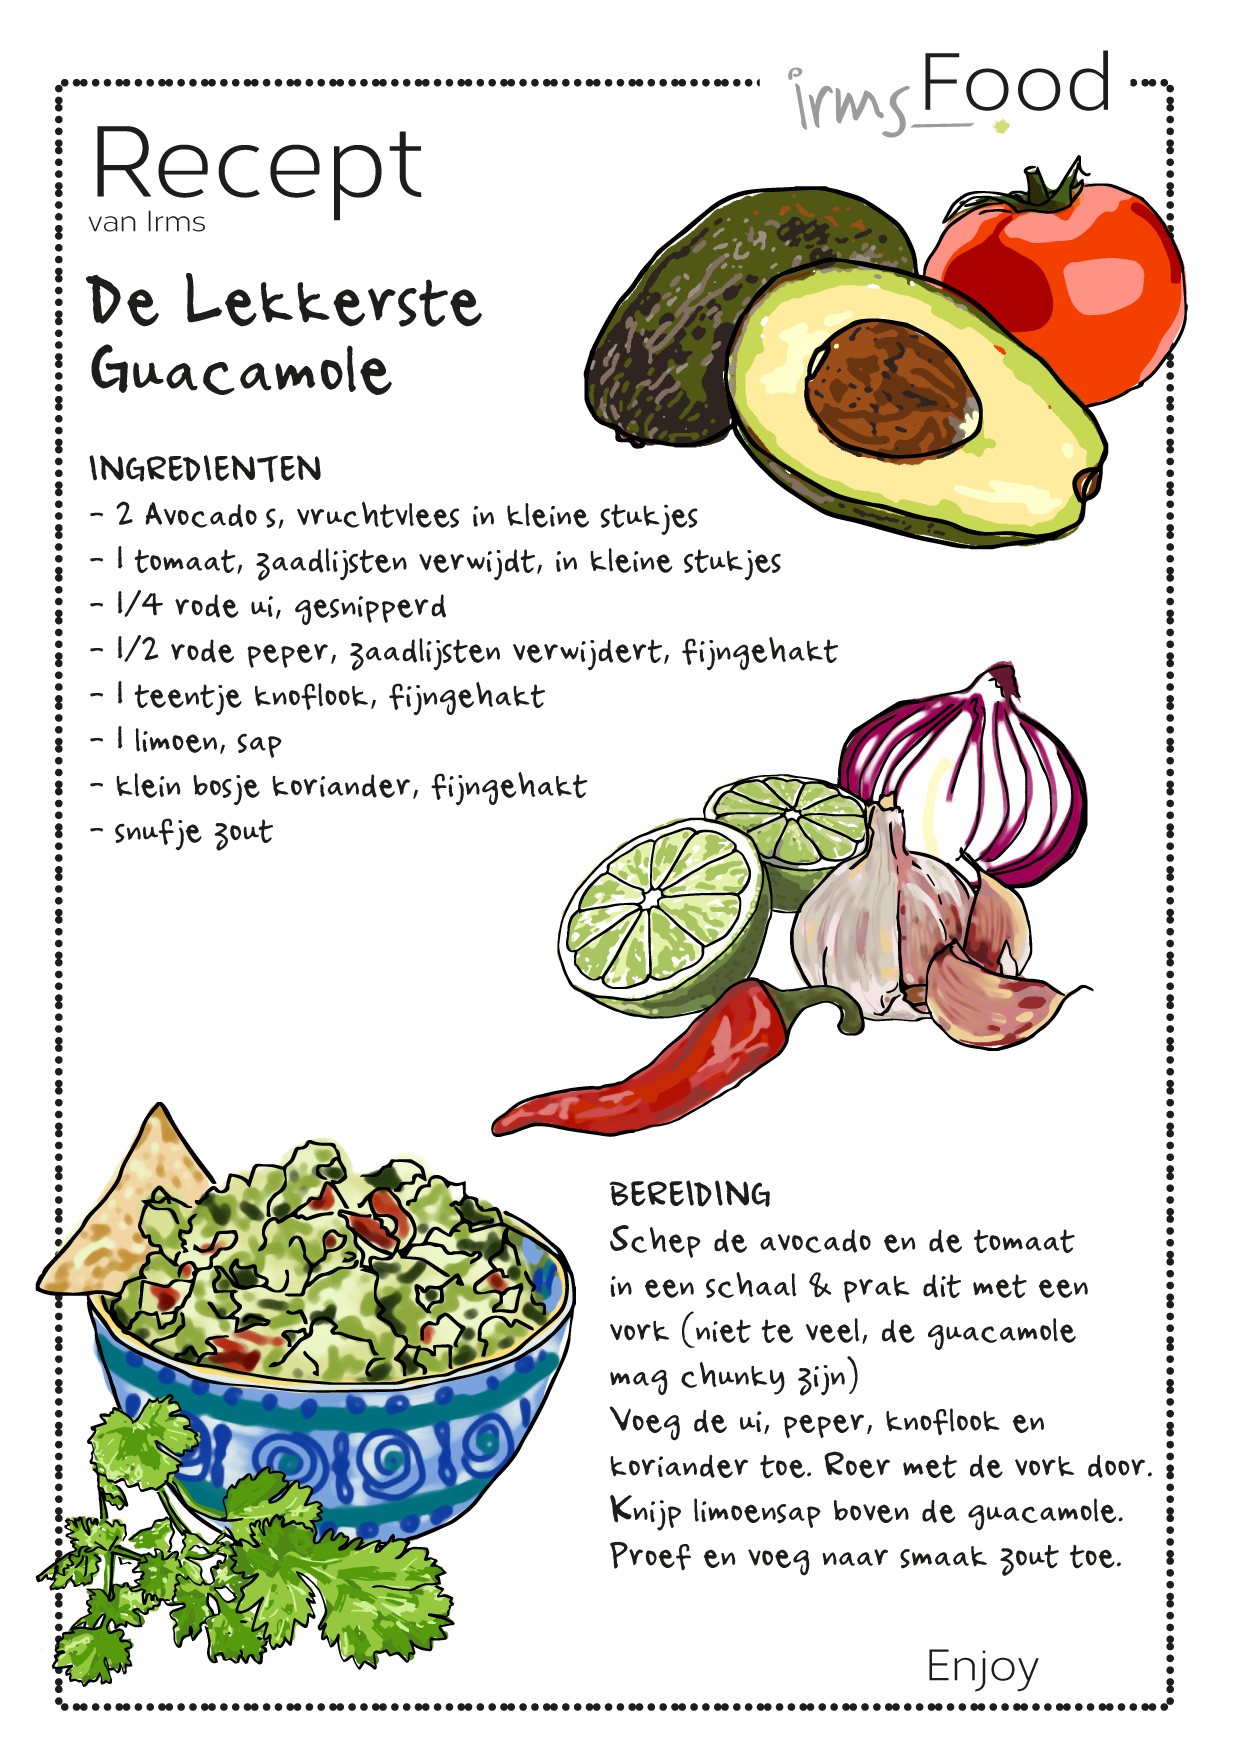 guacamole-illustratie-recept-irmsblog